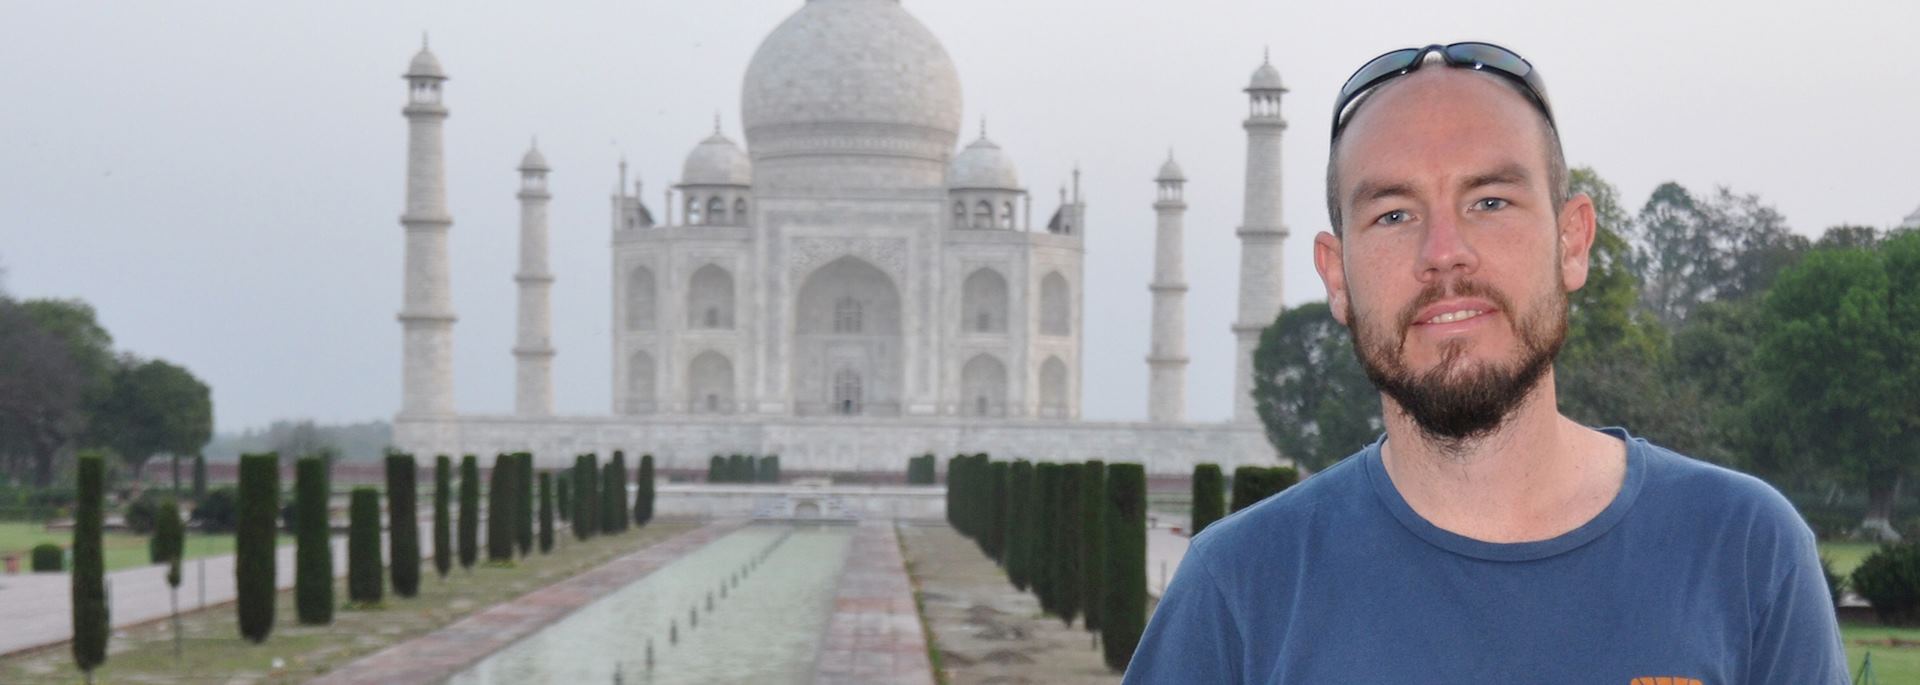 Graham at the Taj Mahal, Agra